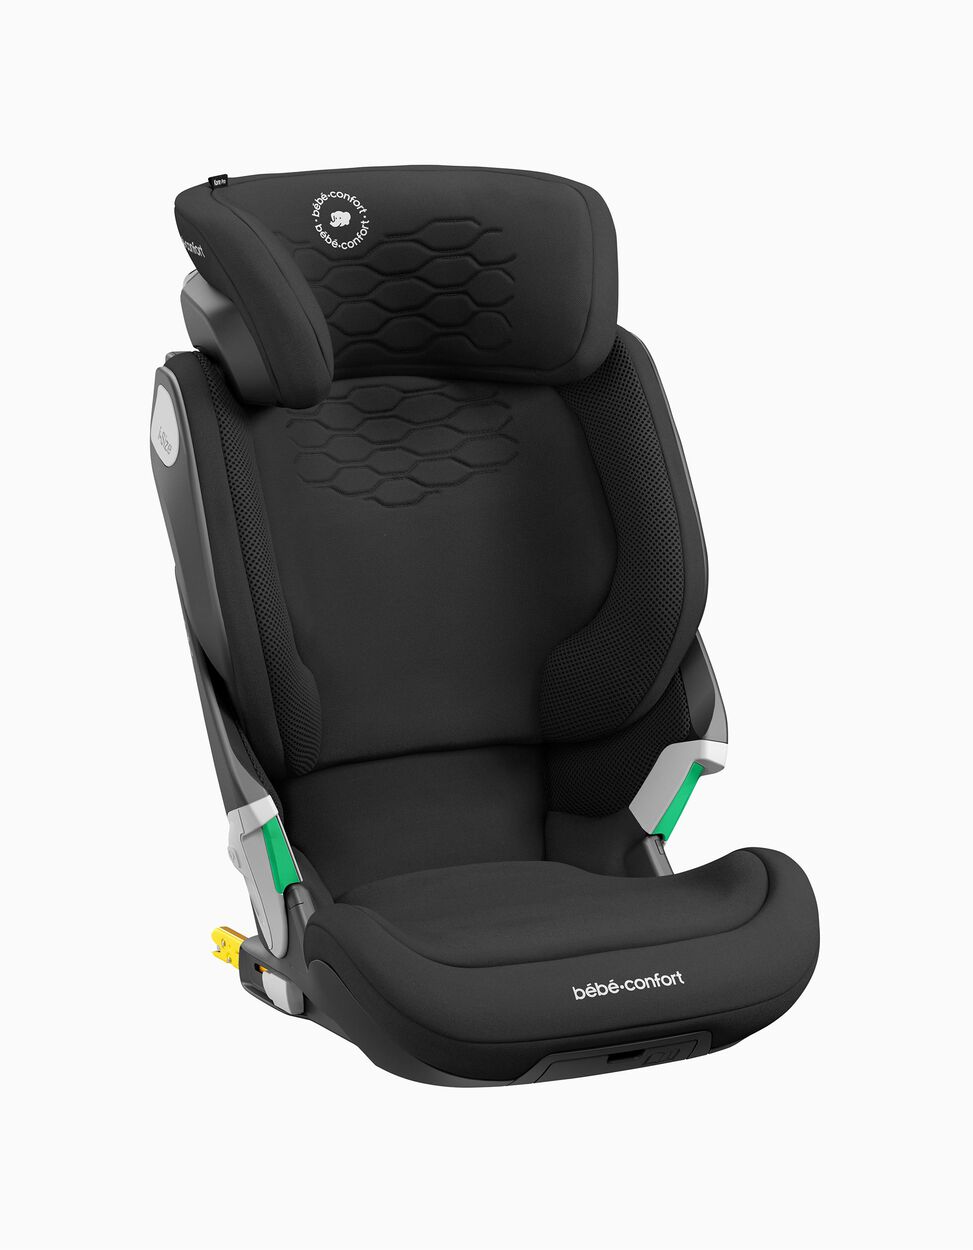 Car Seat I Size Kore Pro Bebe Confort Authentic Black Zippy Online